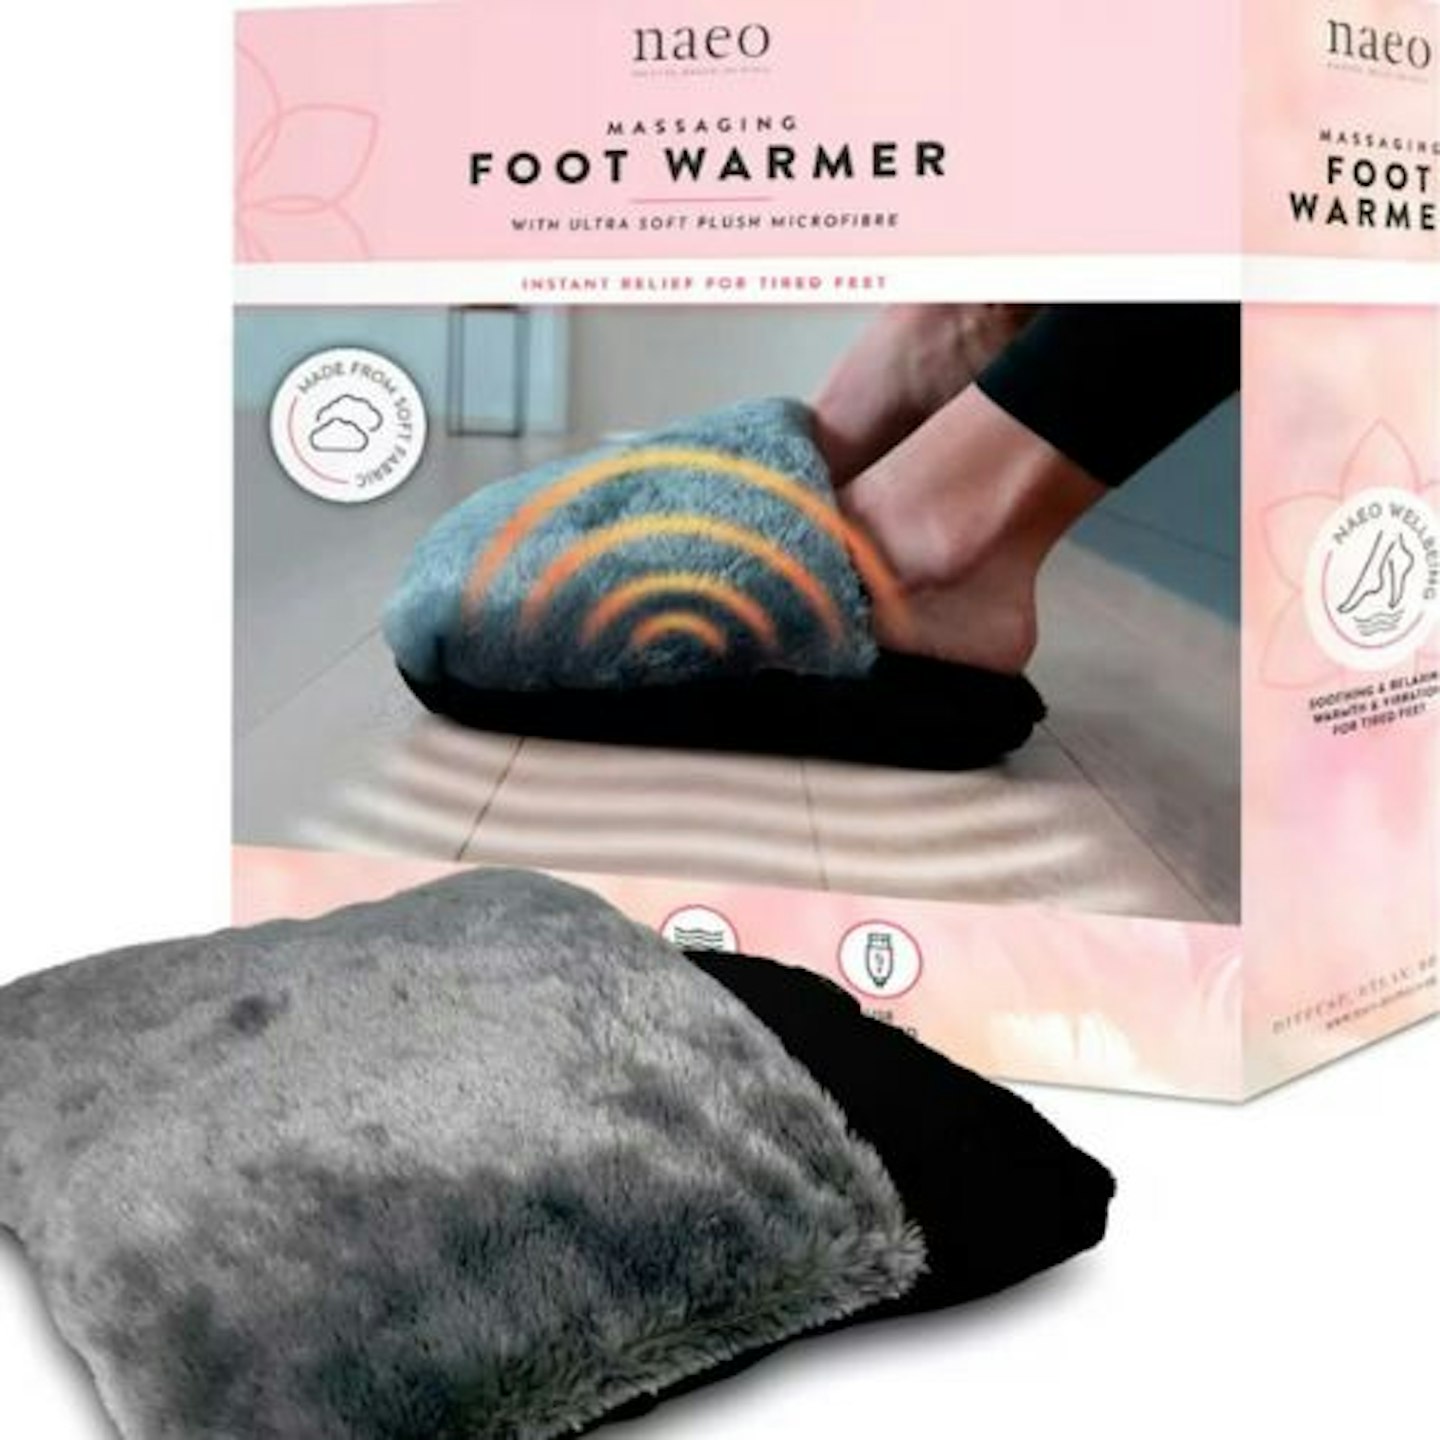 Naeo Massaging Foot warmer